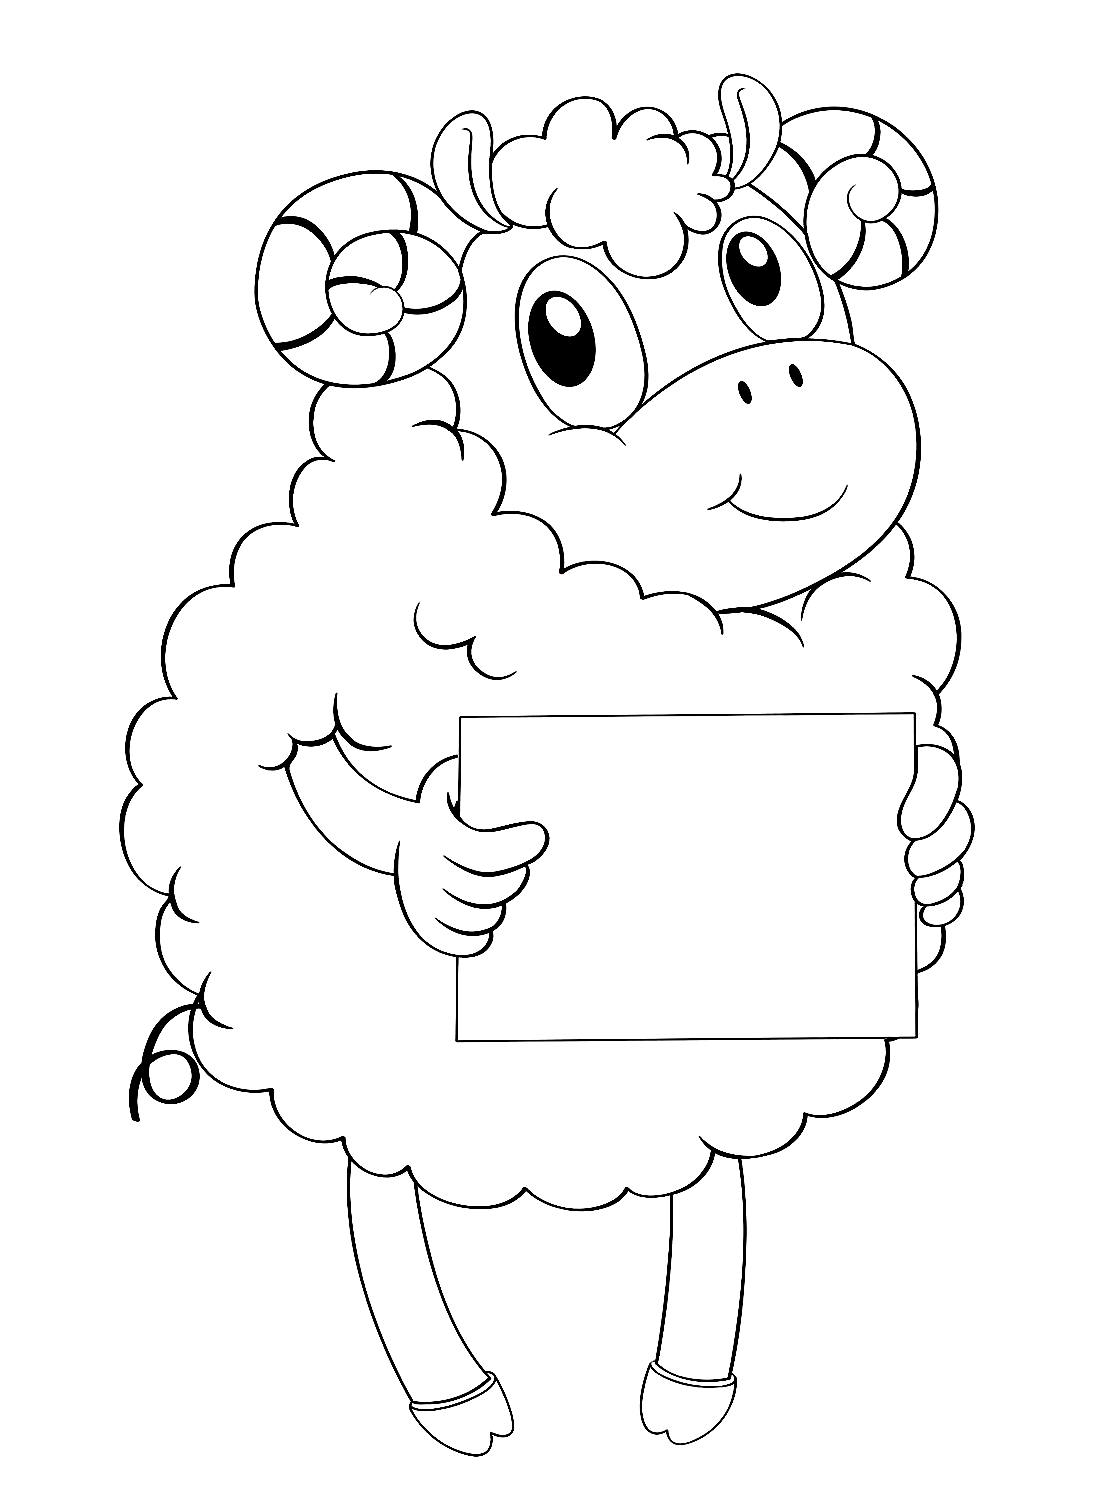 Una linda imagen en color de oveja de Sheep